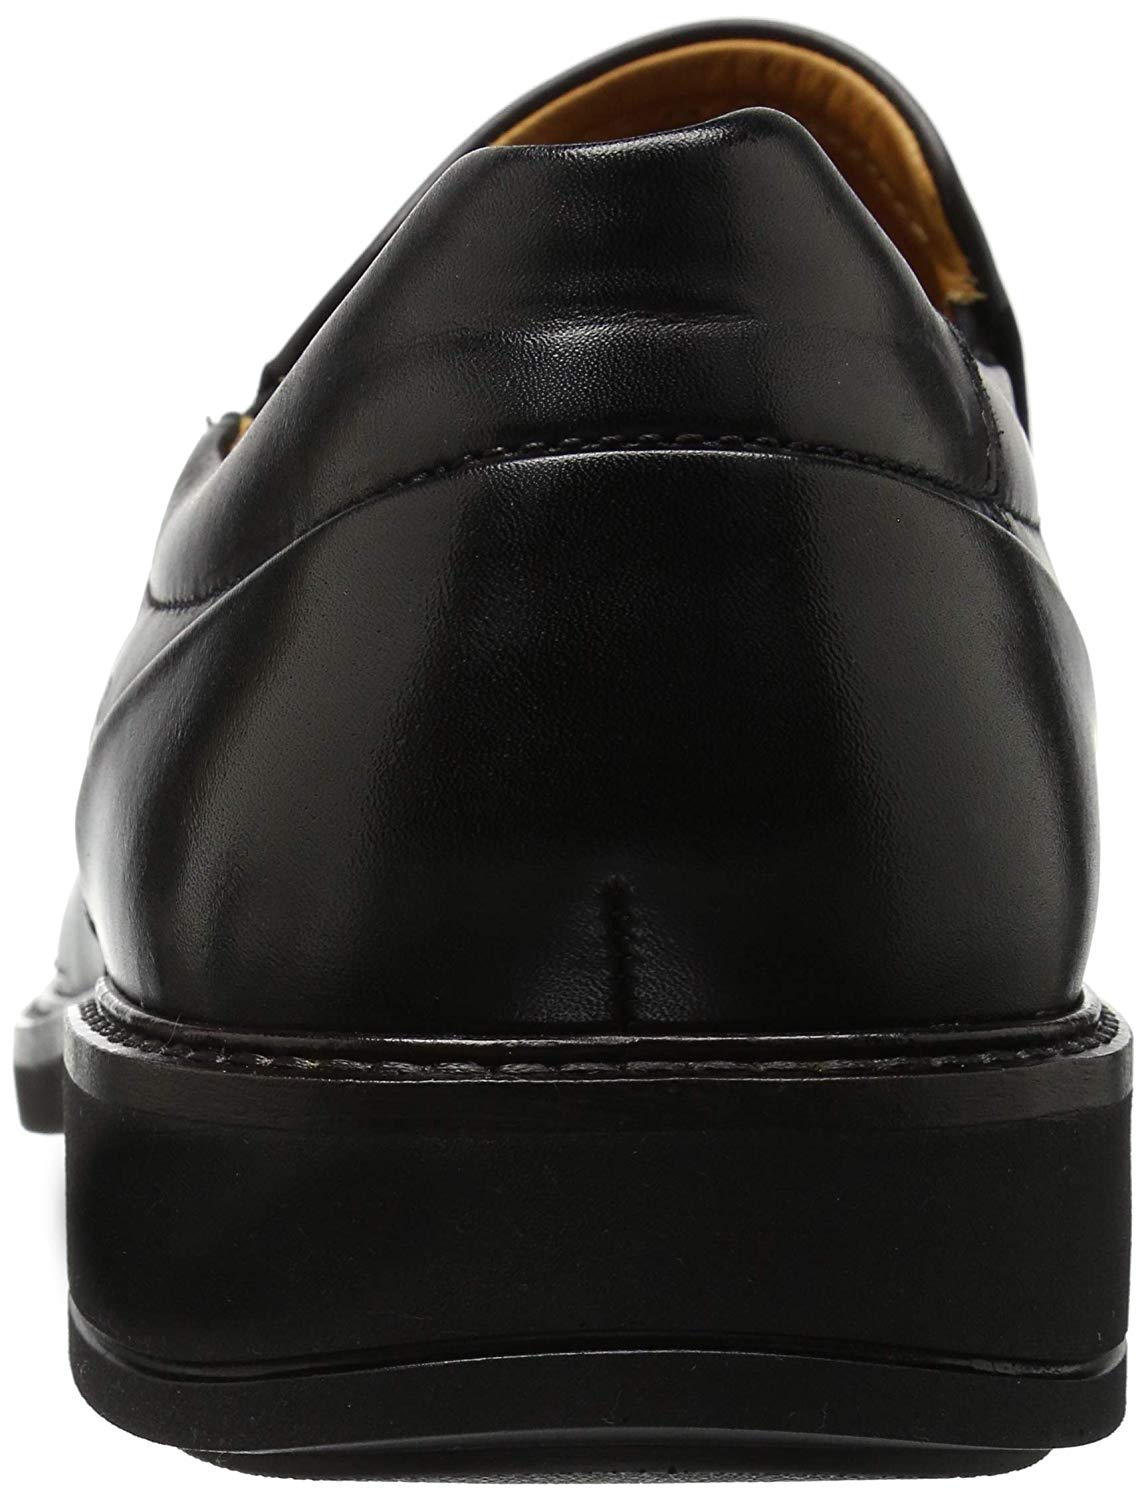 ECCO Mens Holton Closed Toe Slip On Shoes, Black, Size 10.0 CvPK | eBay